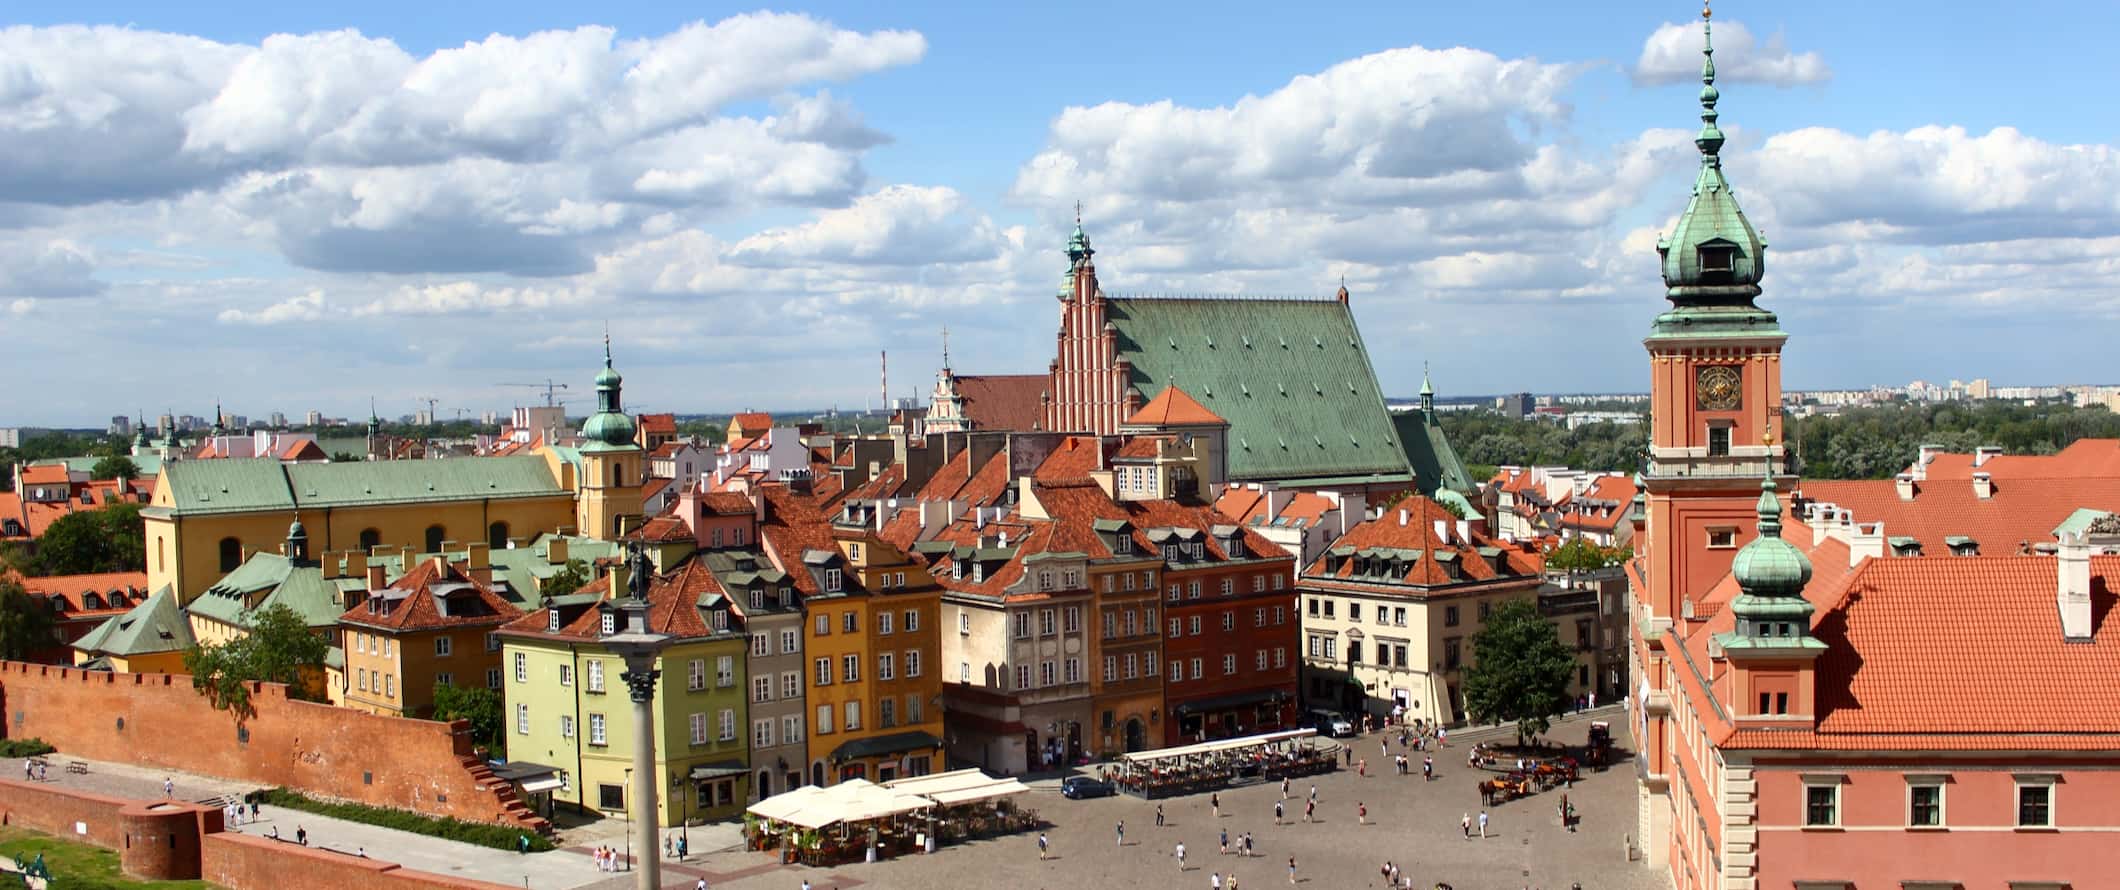 Edifícios coloridos na antiga cidade de Varsóvia, Polônia, como pode ser visto de cima